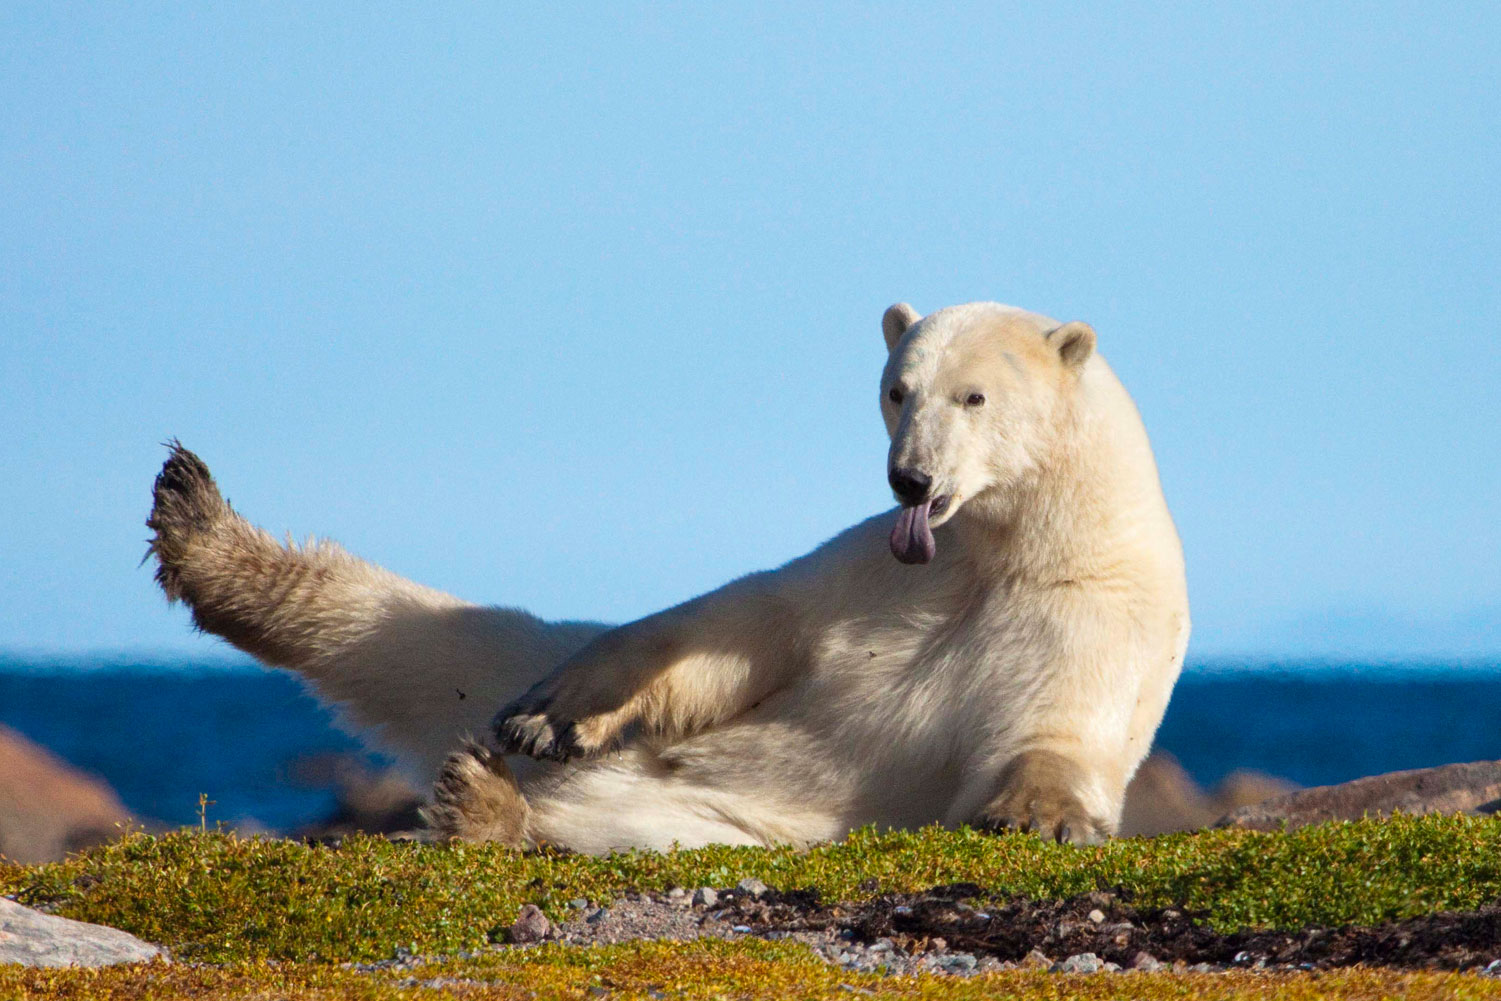 Polar bear in Canada's arctic wilds.